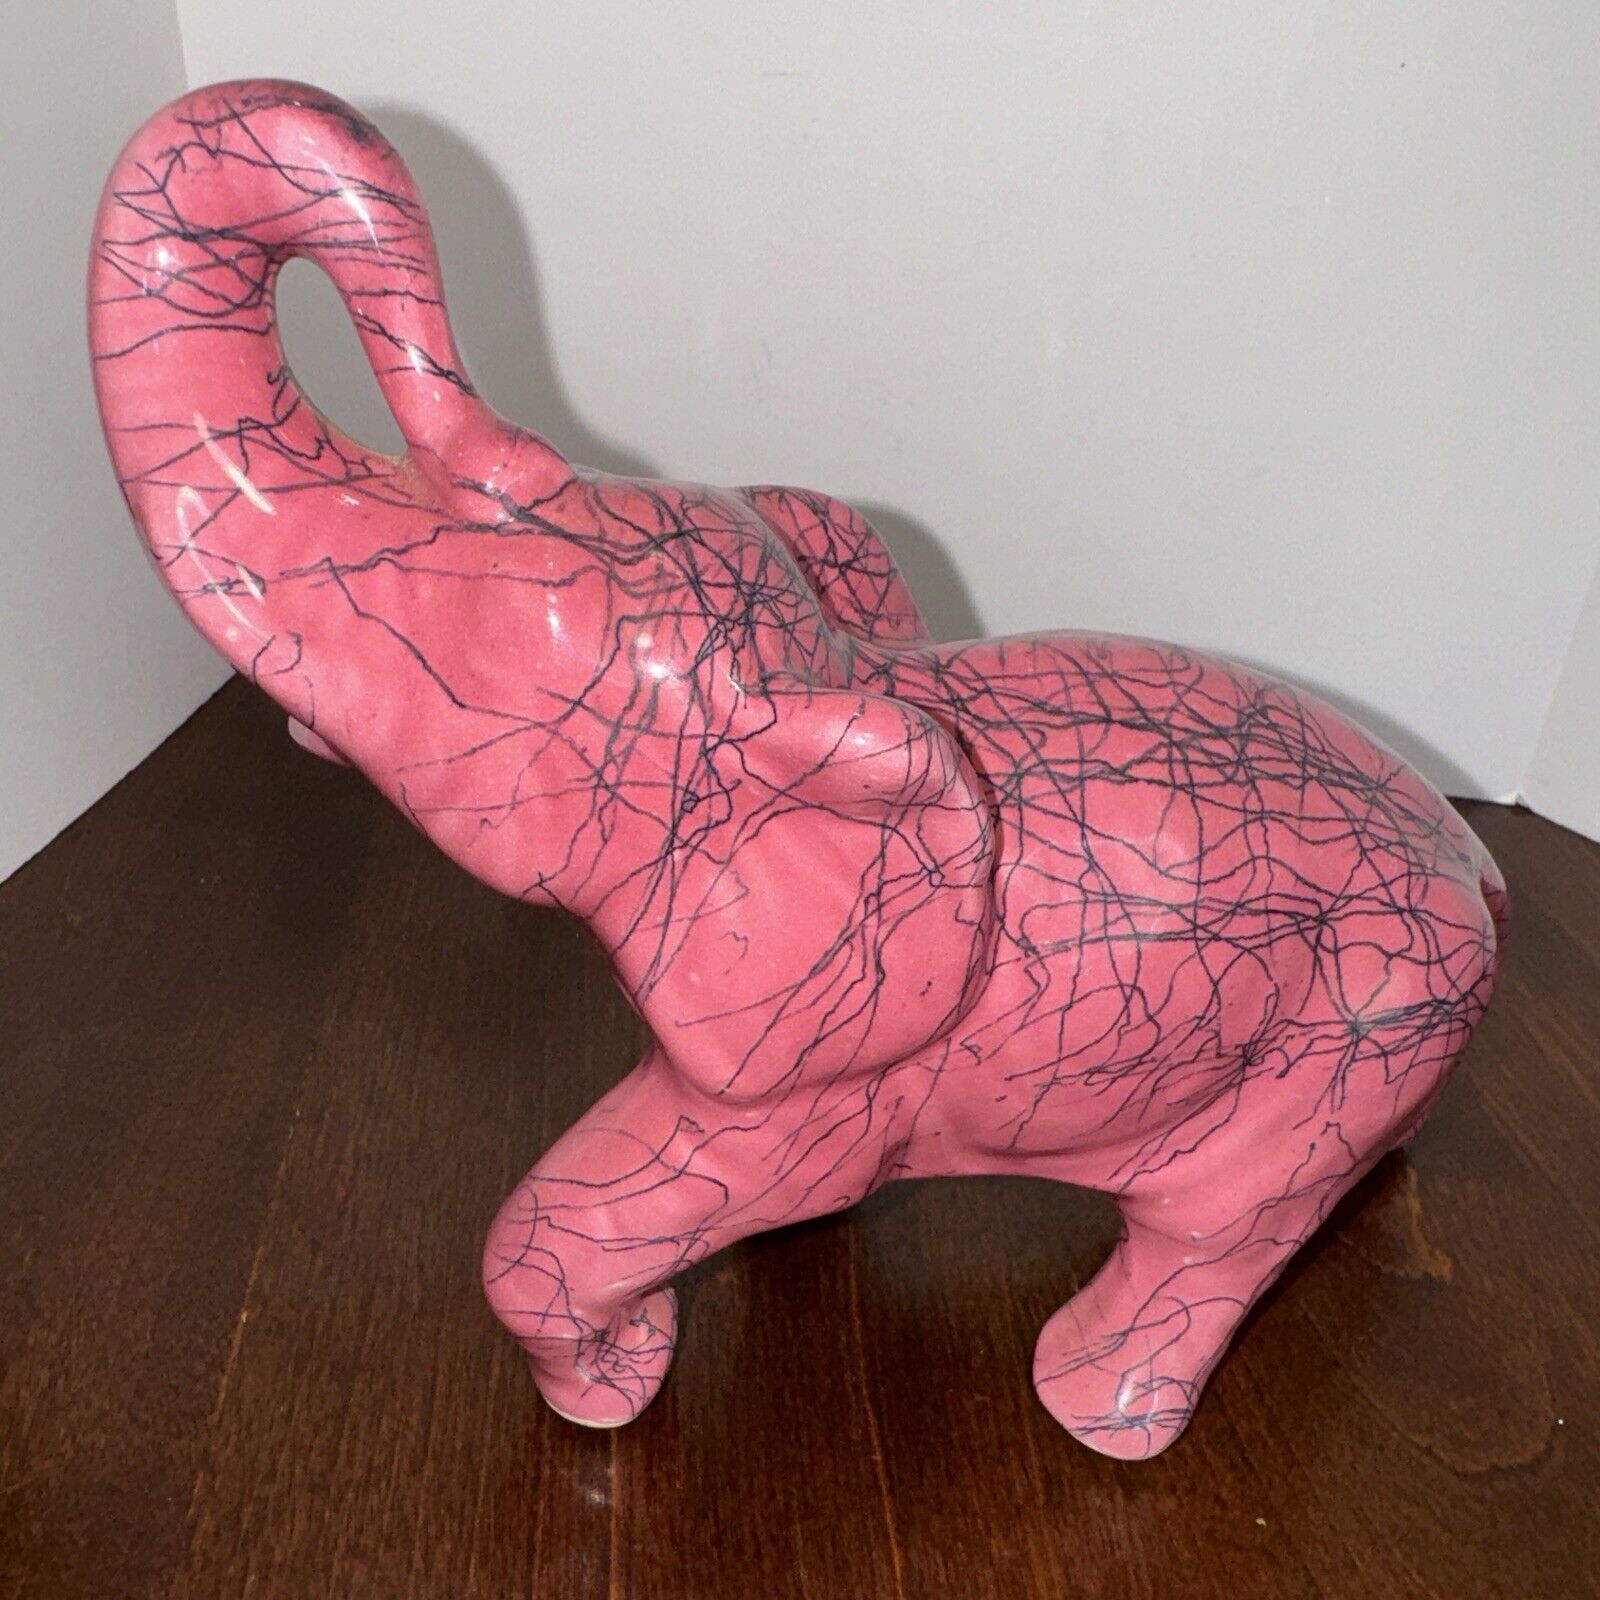 La Vie Pink Elephant Ceramic Animal Figurine MEDIUM 6x7” VTG